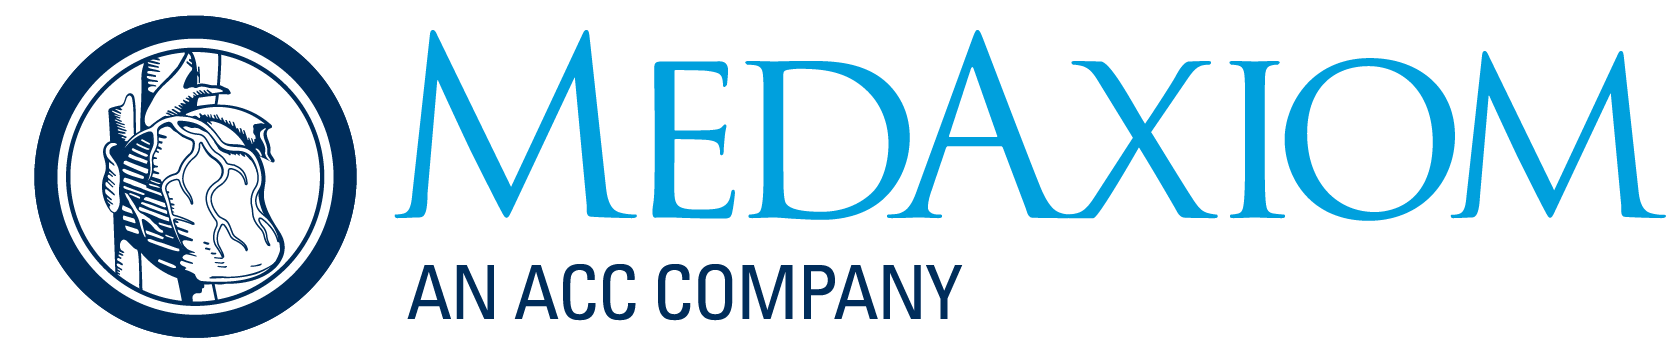 MedAxiom Company Logo